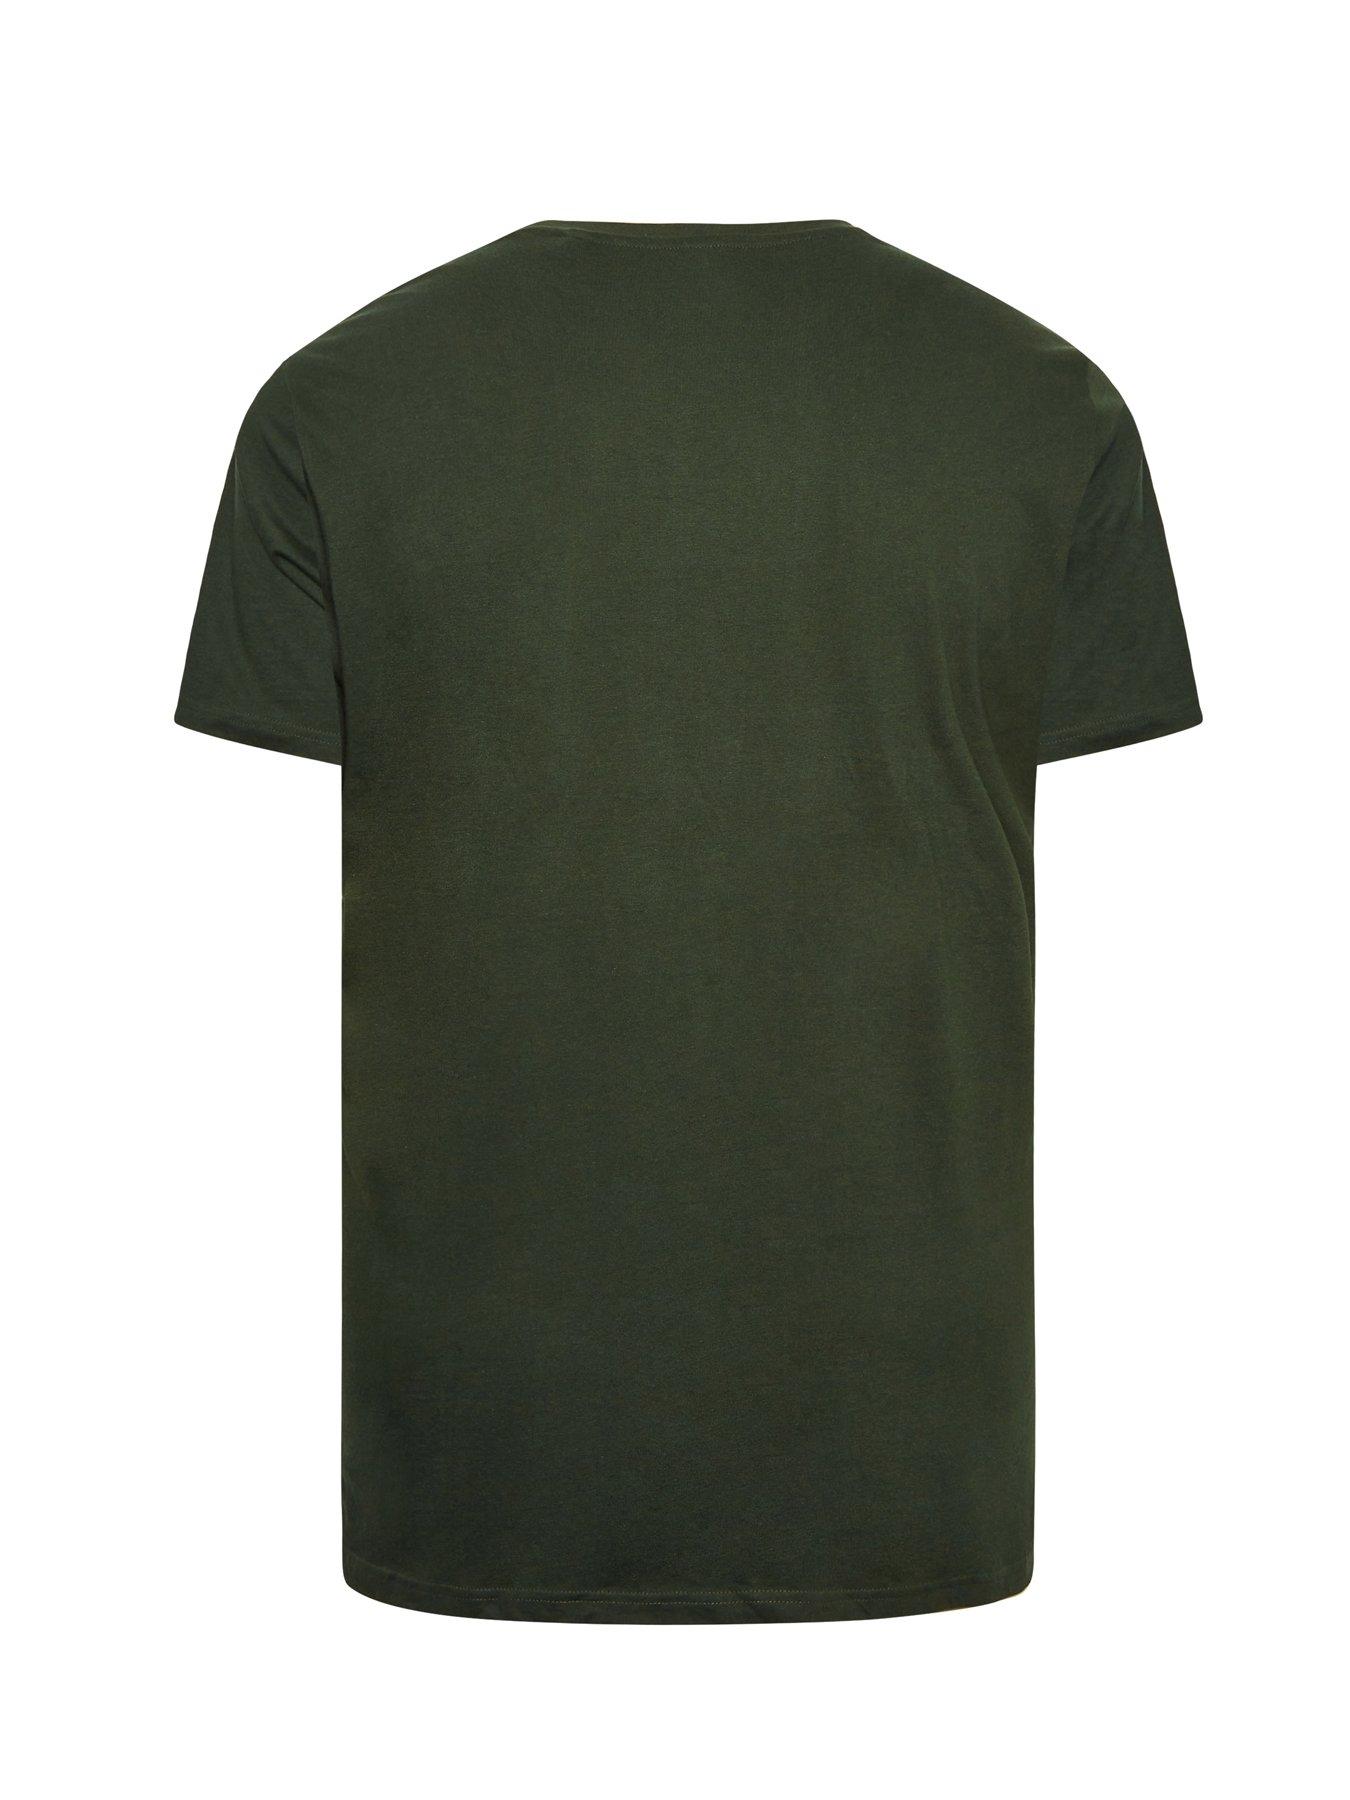 BadRhino Plain T-shirt - Forest Green | very.co.uk